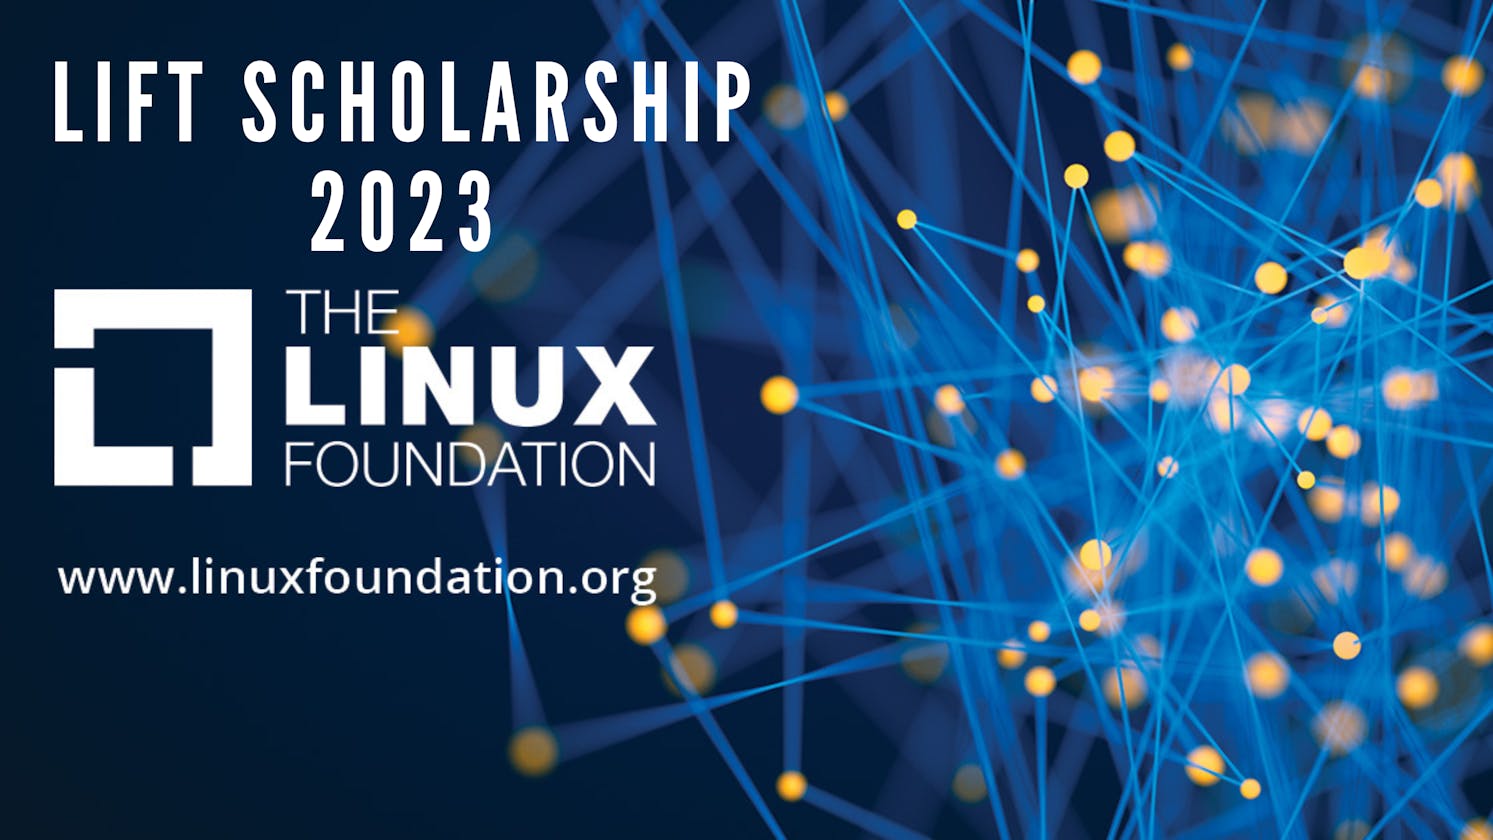 The Linux Foundation (LiFT) Scholarship 2023 Program